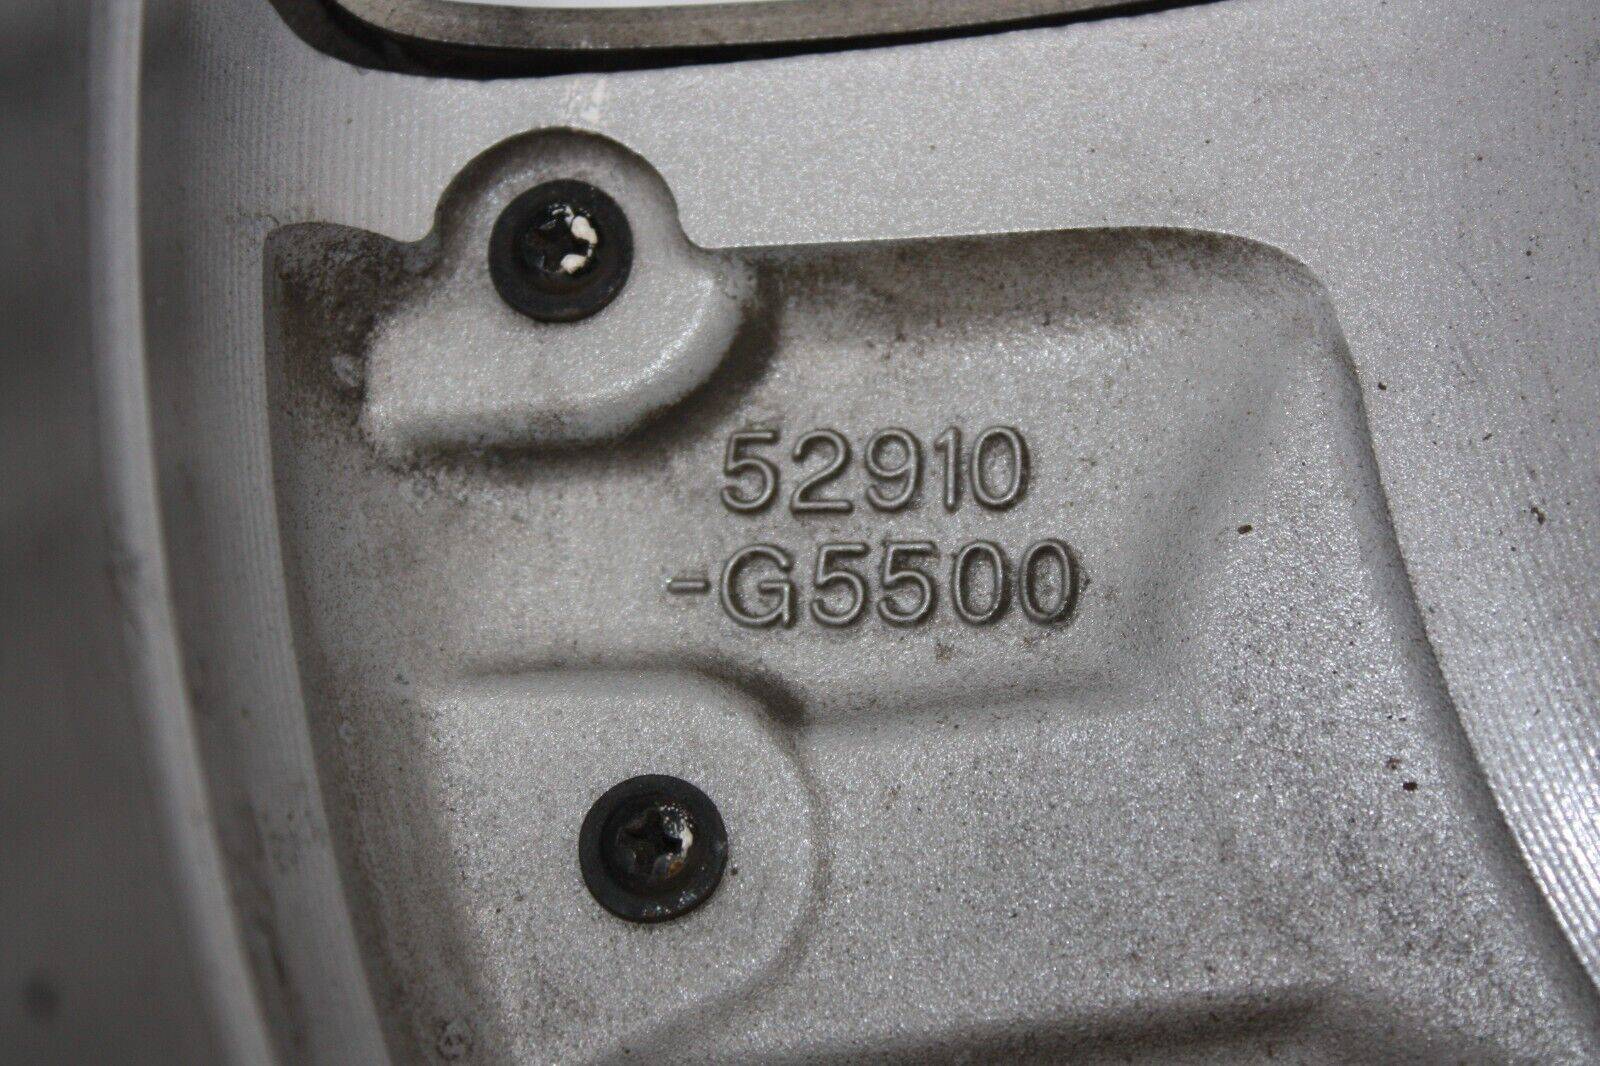 Kia-Niro-16-Alloy-Wheel-52910-G5500-Genuine-175594498376-13